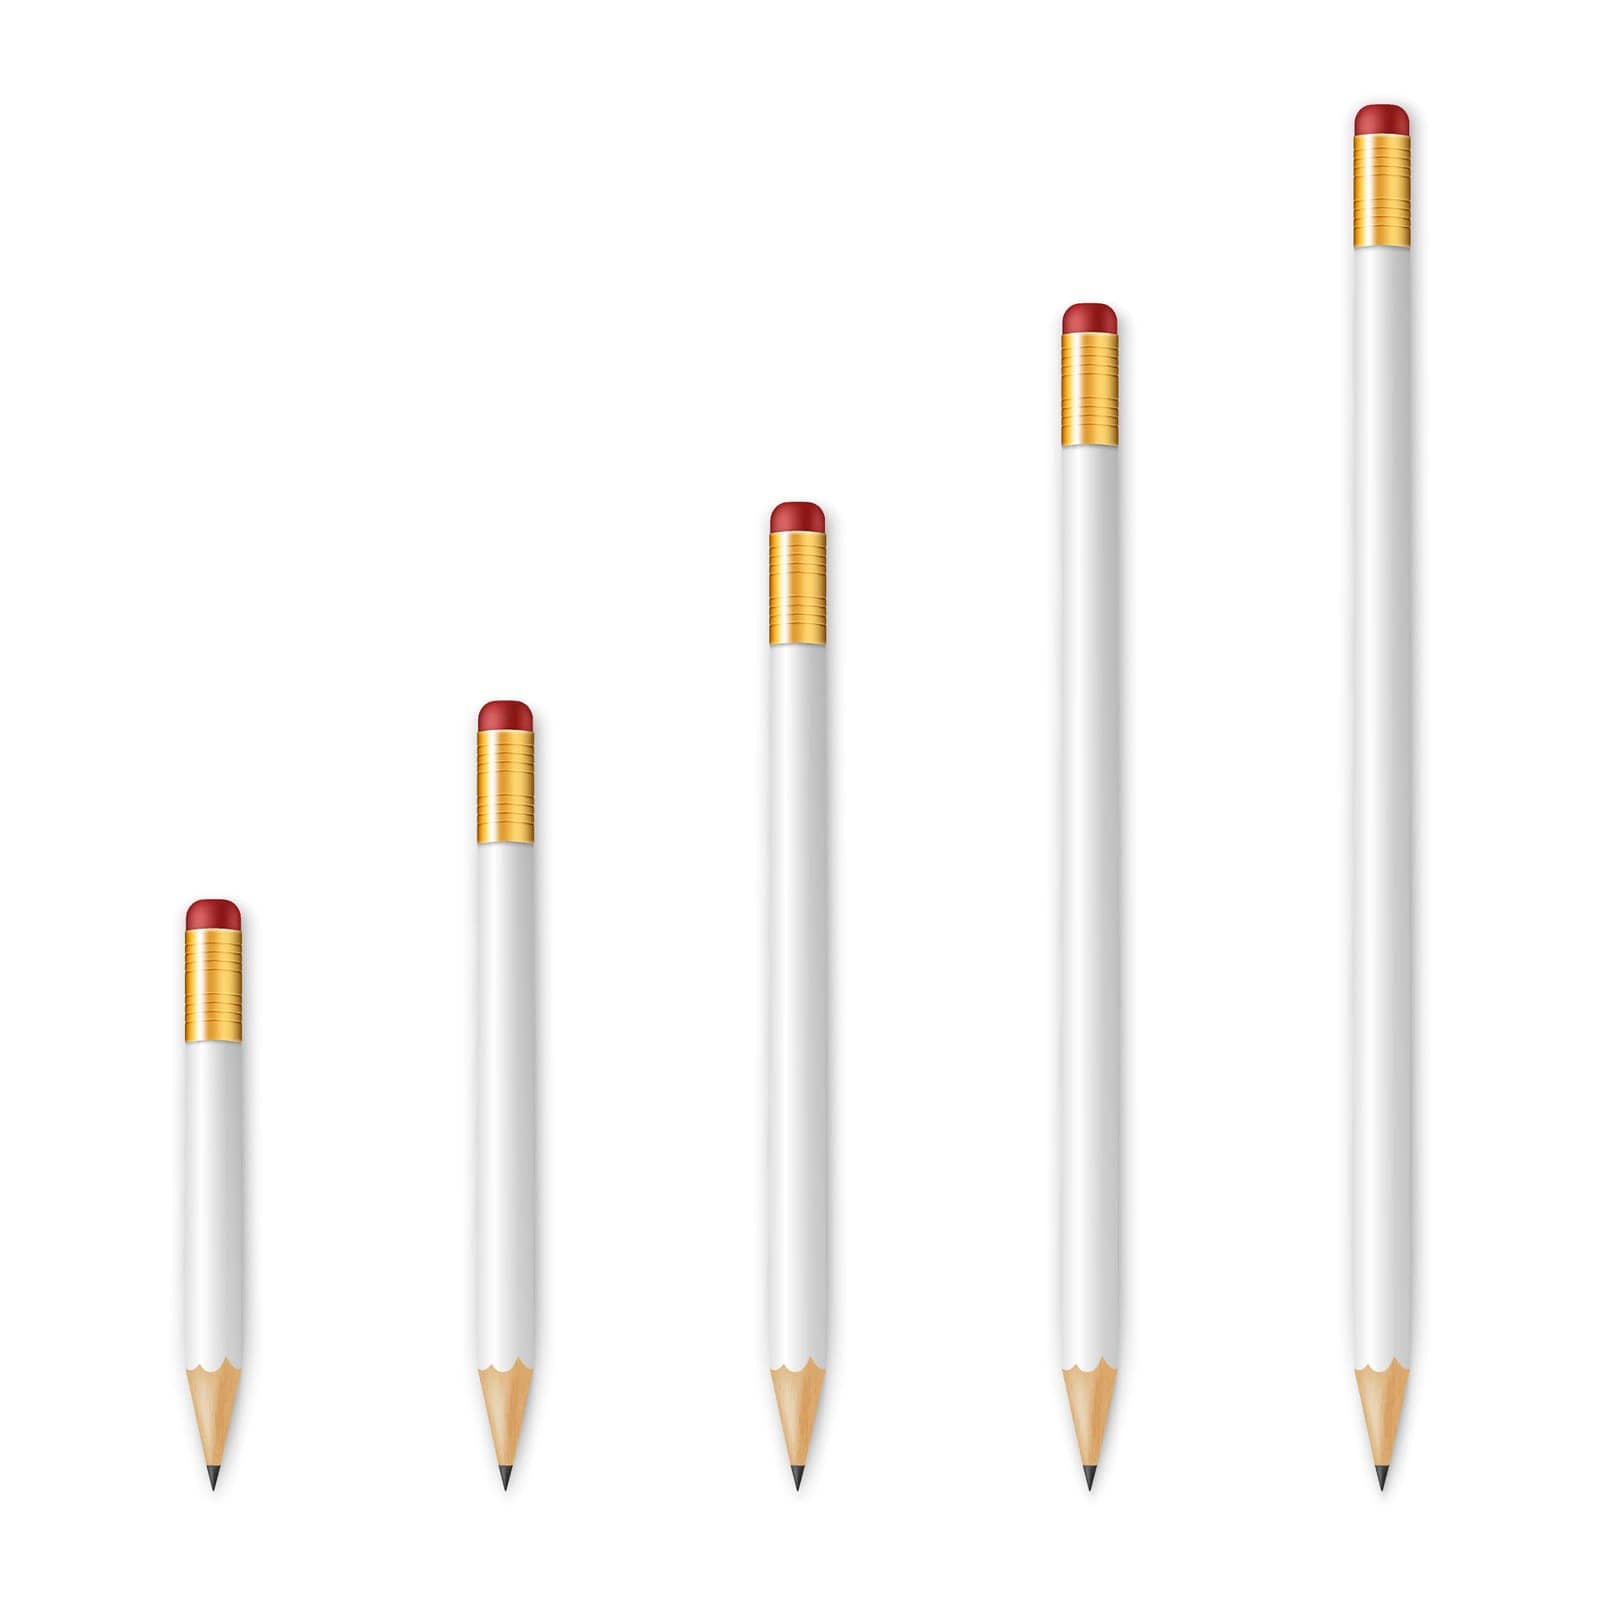 White wooden sharp pencils by Gomolach